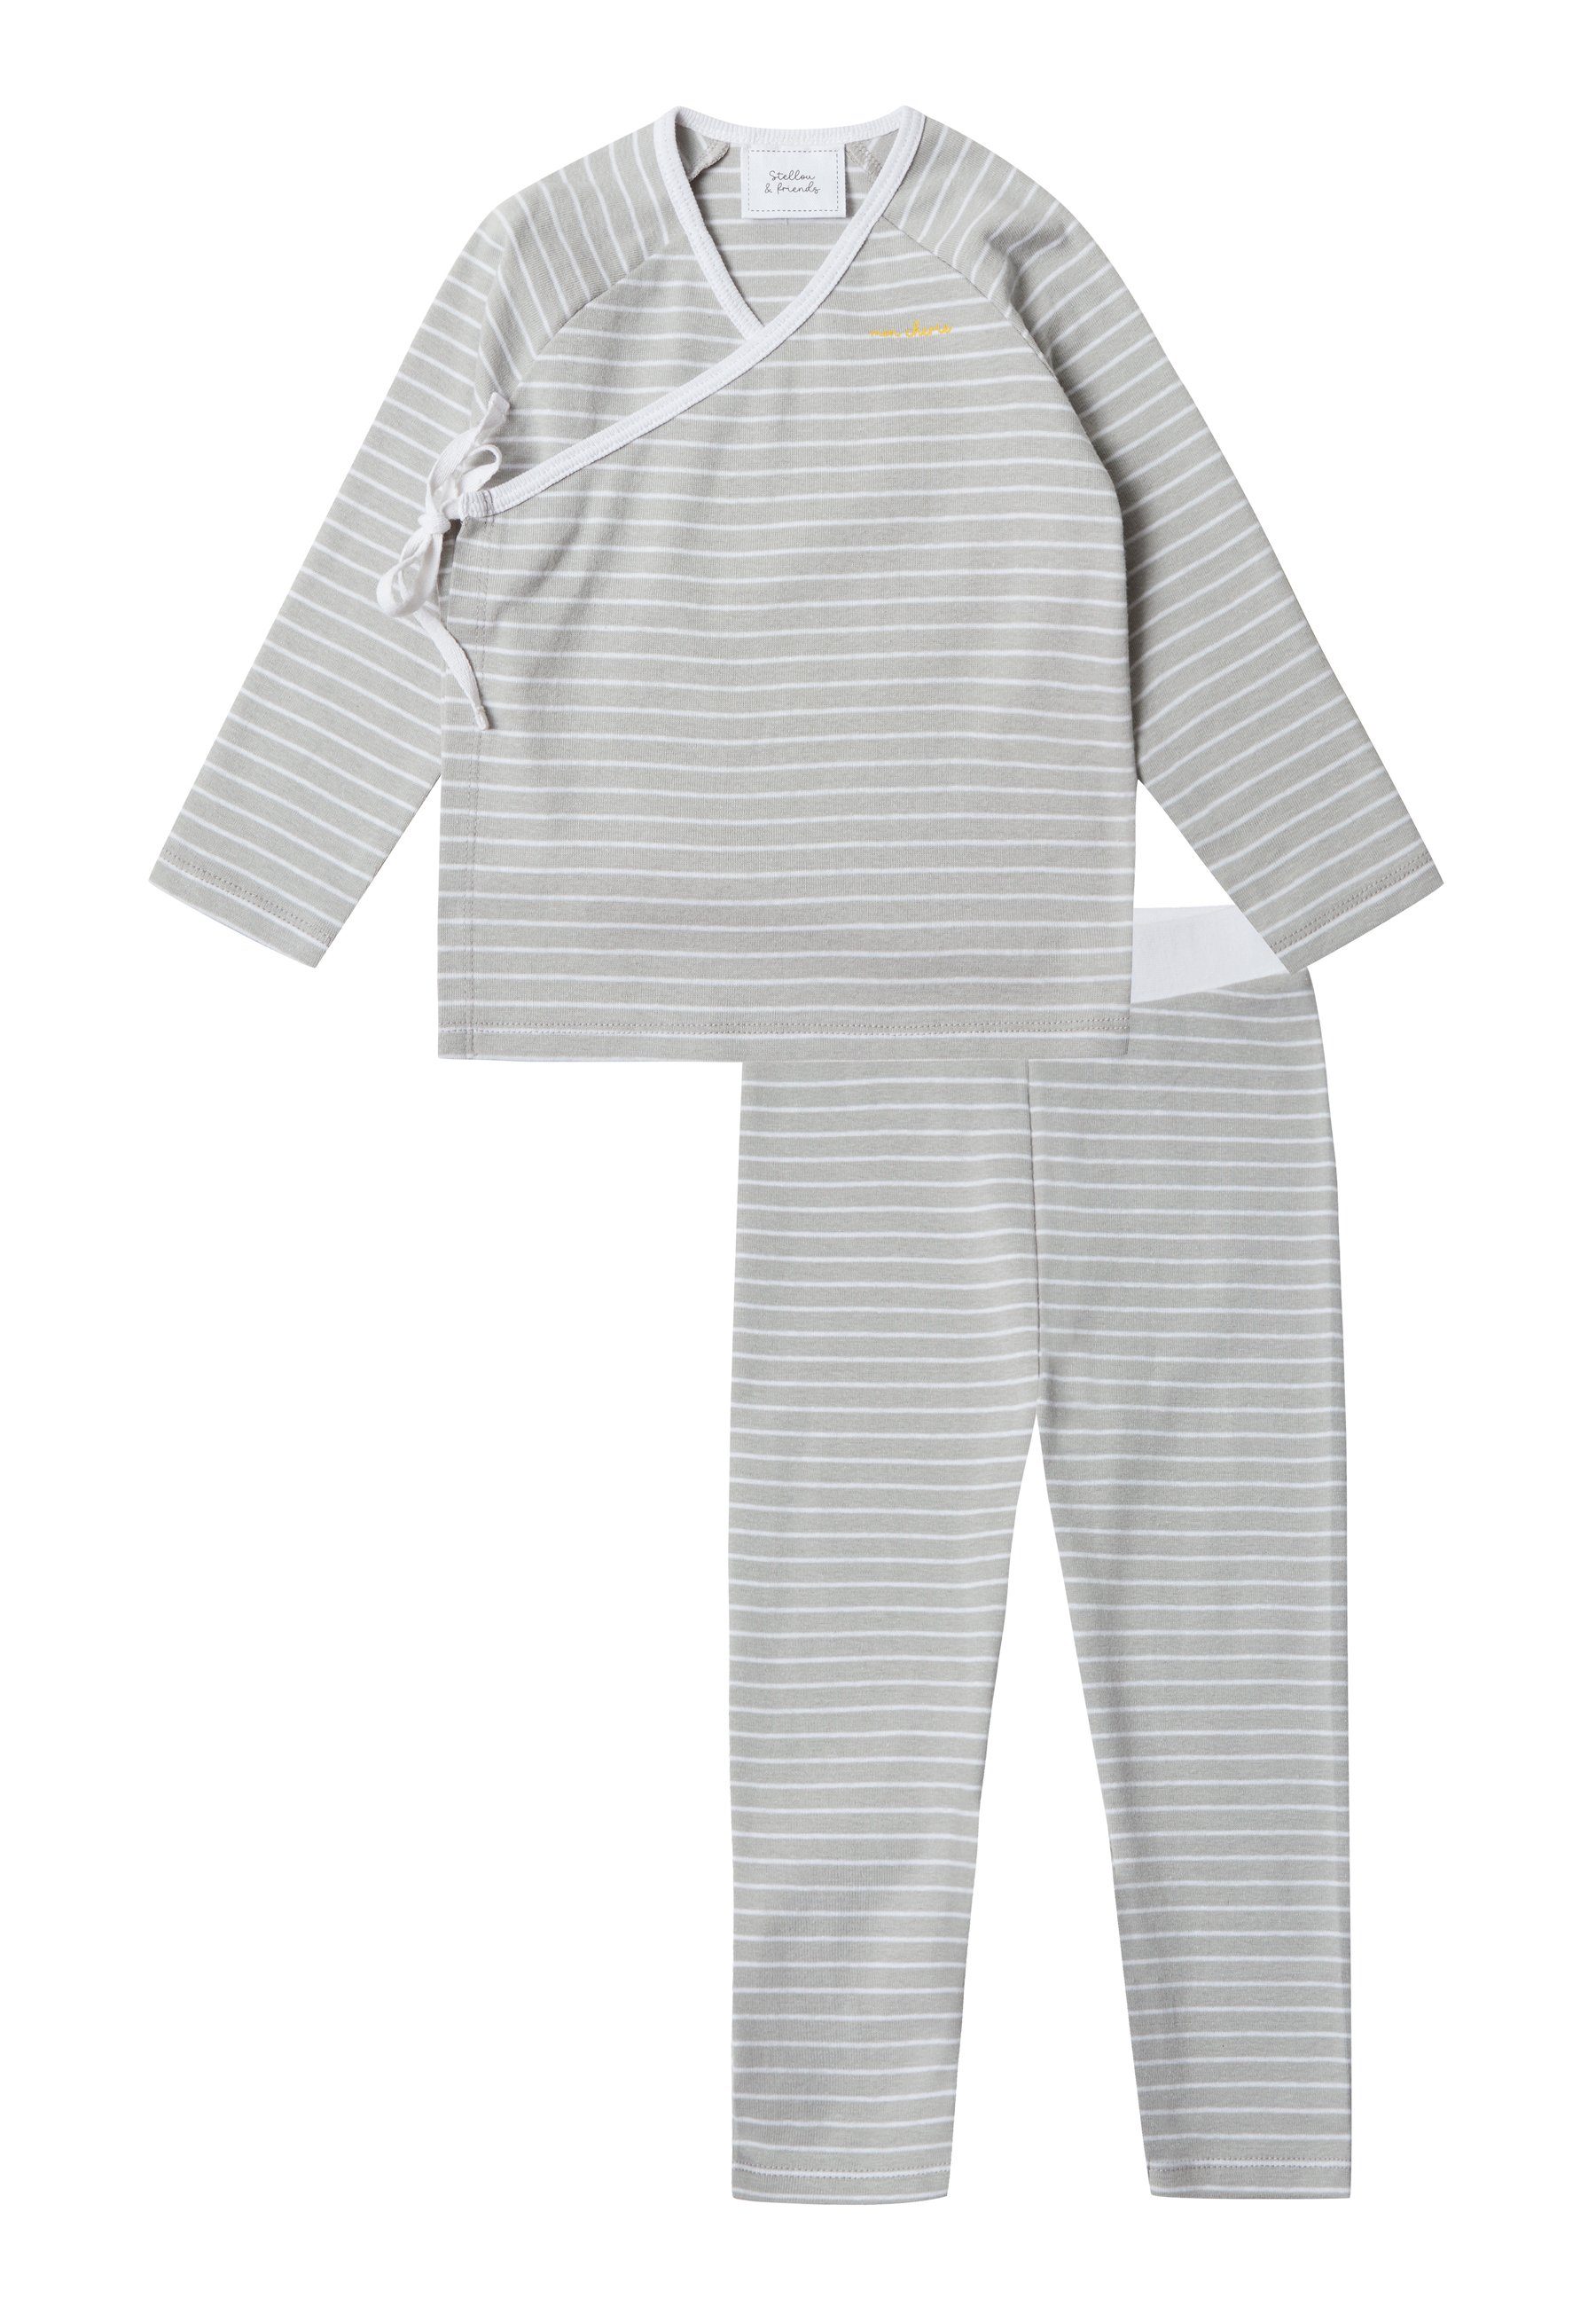 Stellou & friends Pyjama Home-Wear Set / Pyjama 2tlg. grau